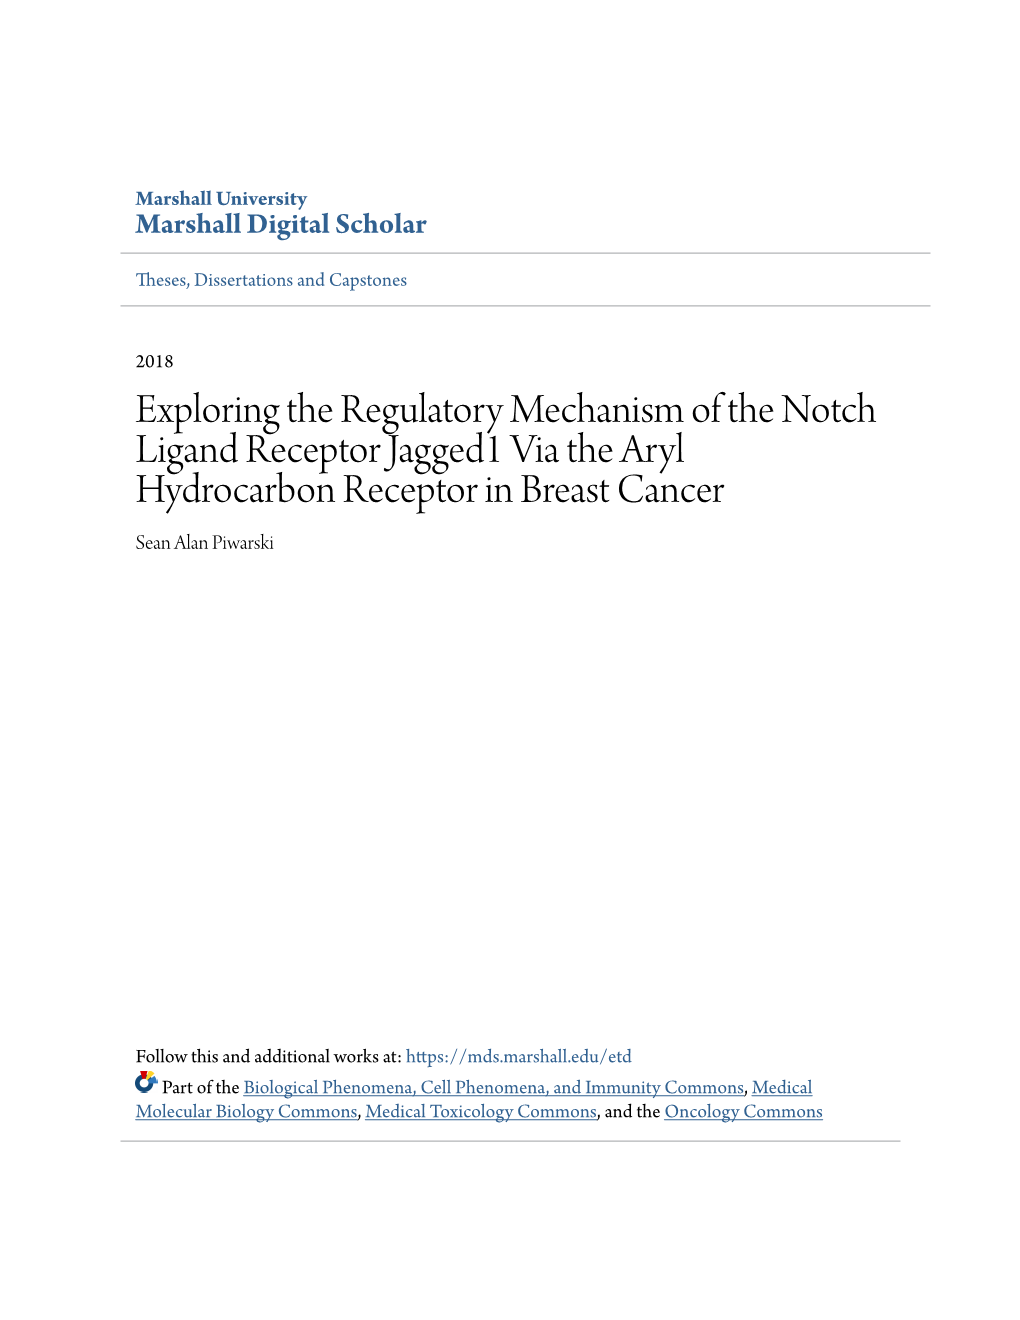 Exploring the Regulatory Mechanism of the Notch Ligand Receptor Jagged1 Via the Aryl Hydrocarbon Receptor in Breast Cancer Sean Alan Piwarski